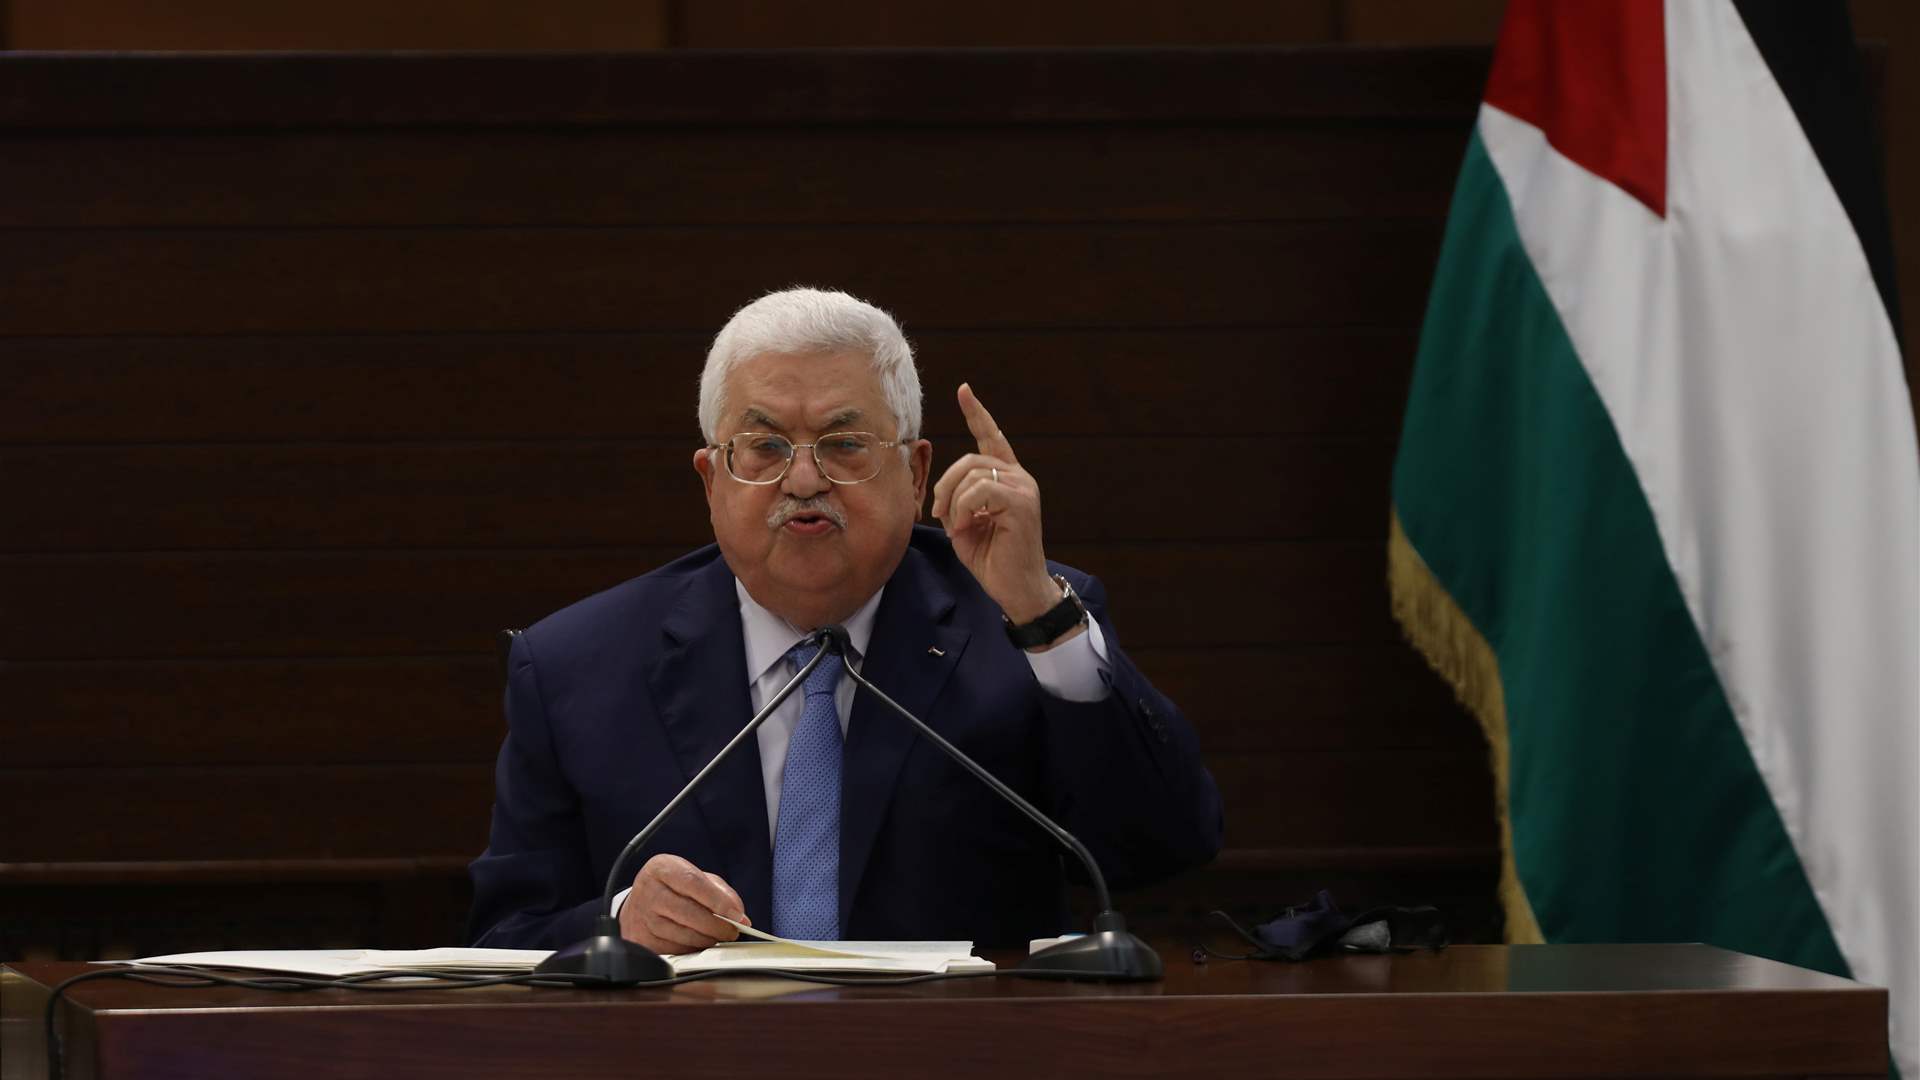 Hamas &#39;regrets&#39; Mahmoud Abbas&#39; speech at Arab Summit, sees Israel as not needing excuses